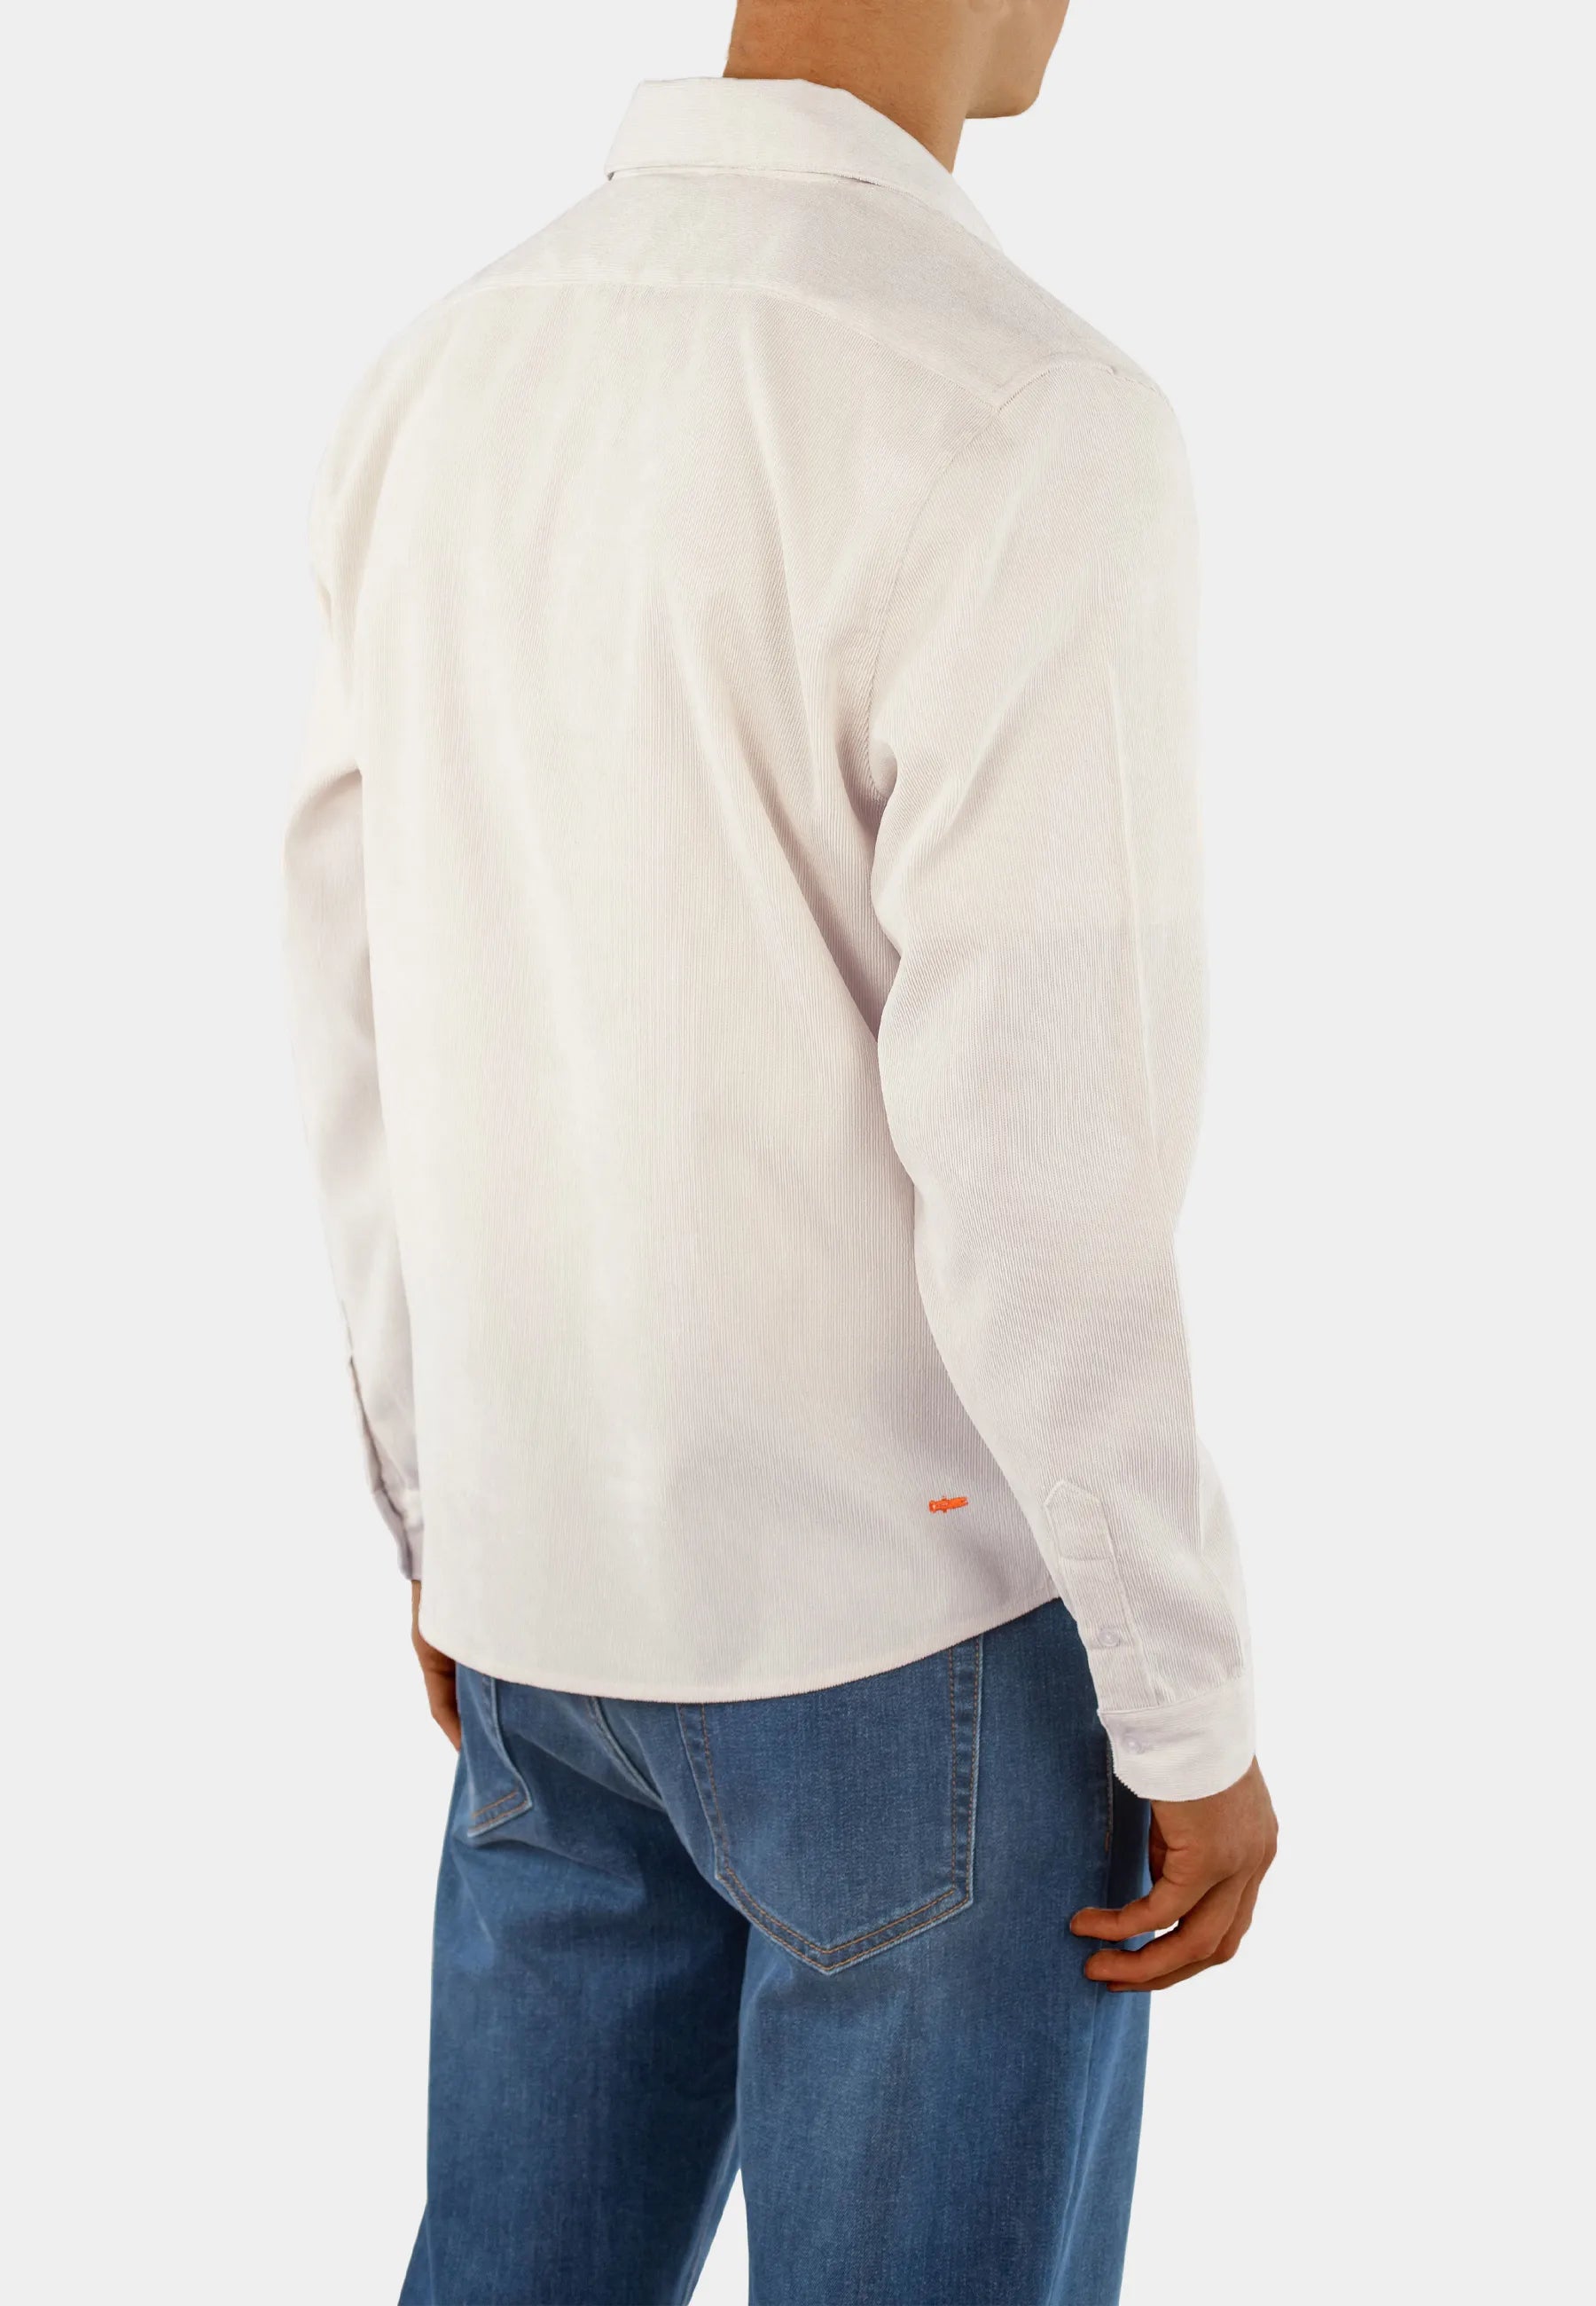 Aden Cord Zip Shirt - Off White